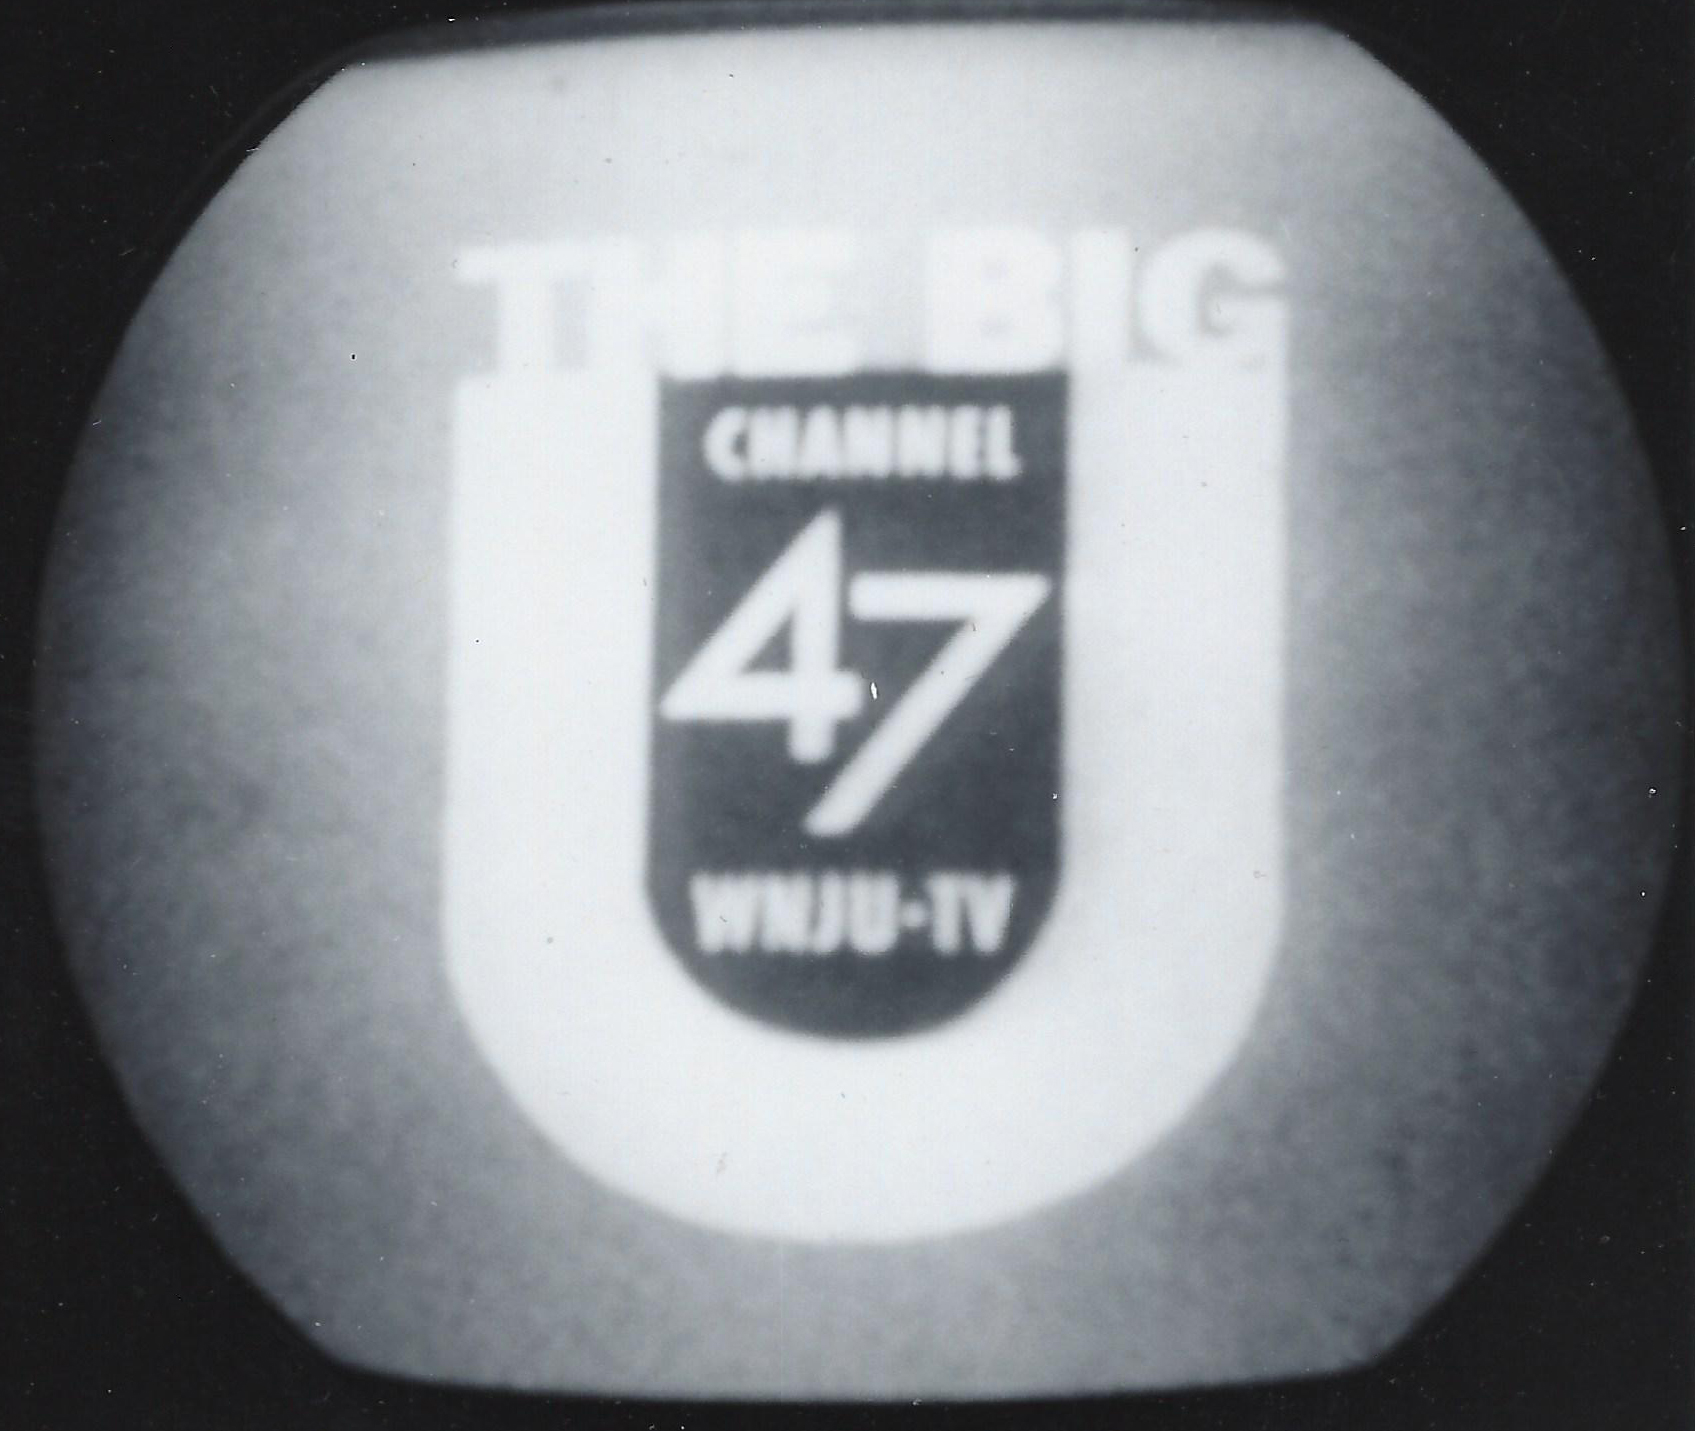 WNJU TV Channel 47 Linden, New Jersey